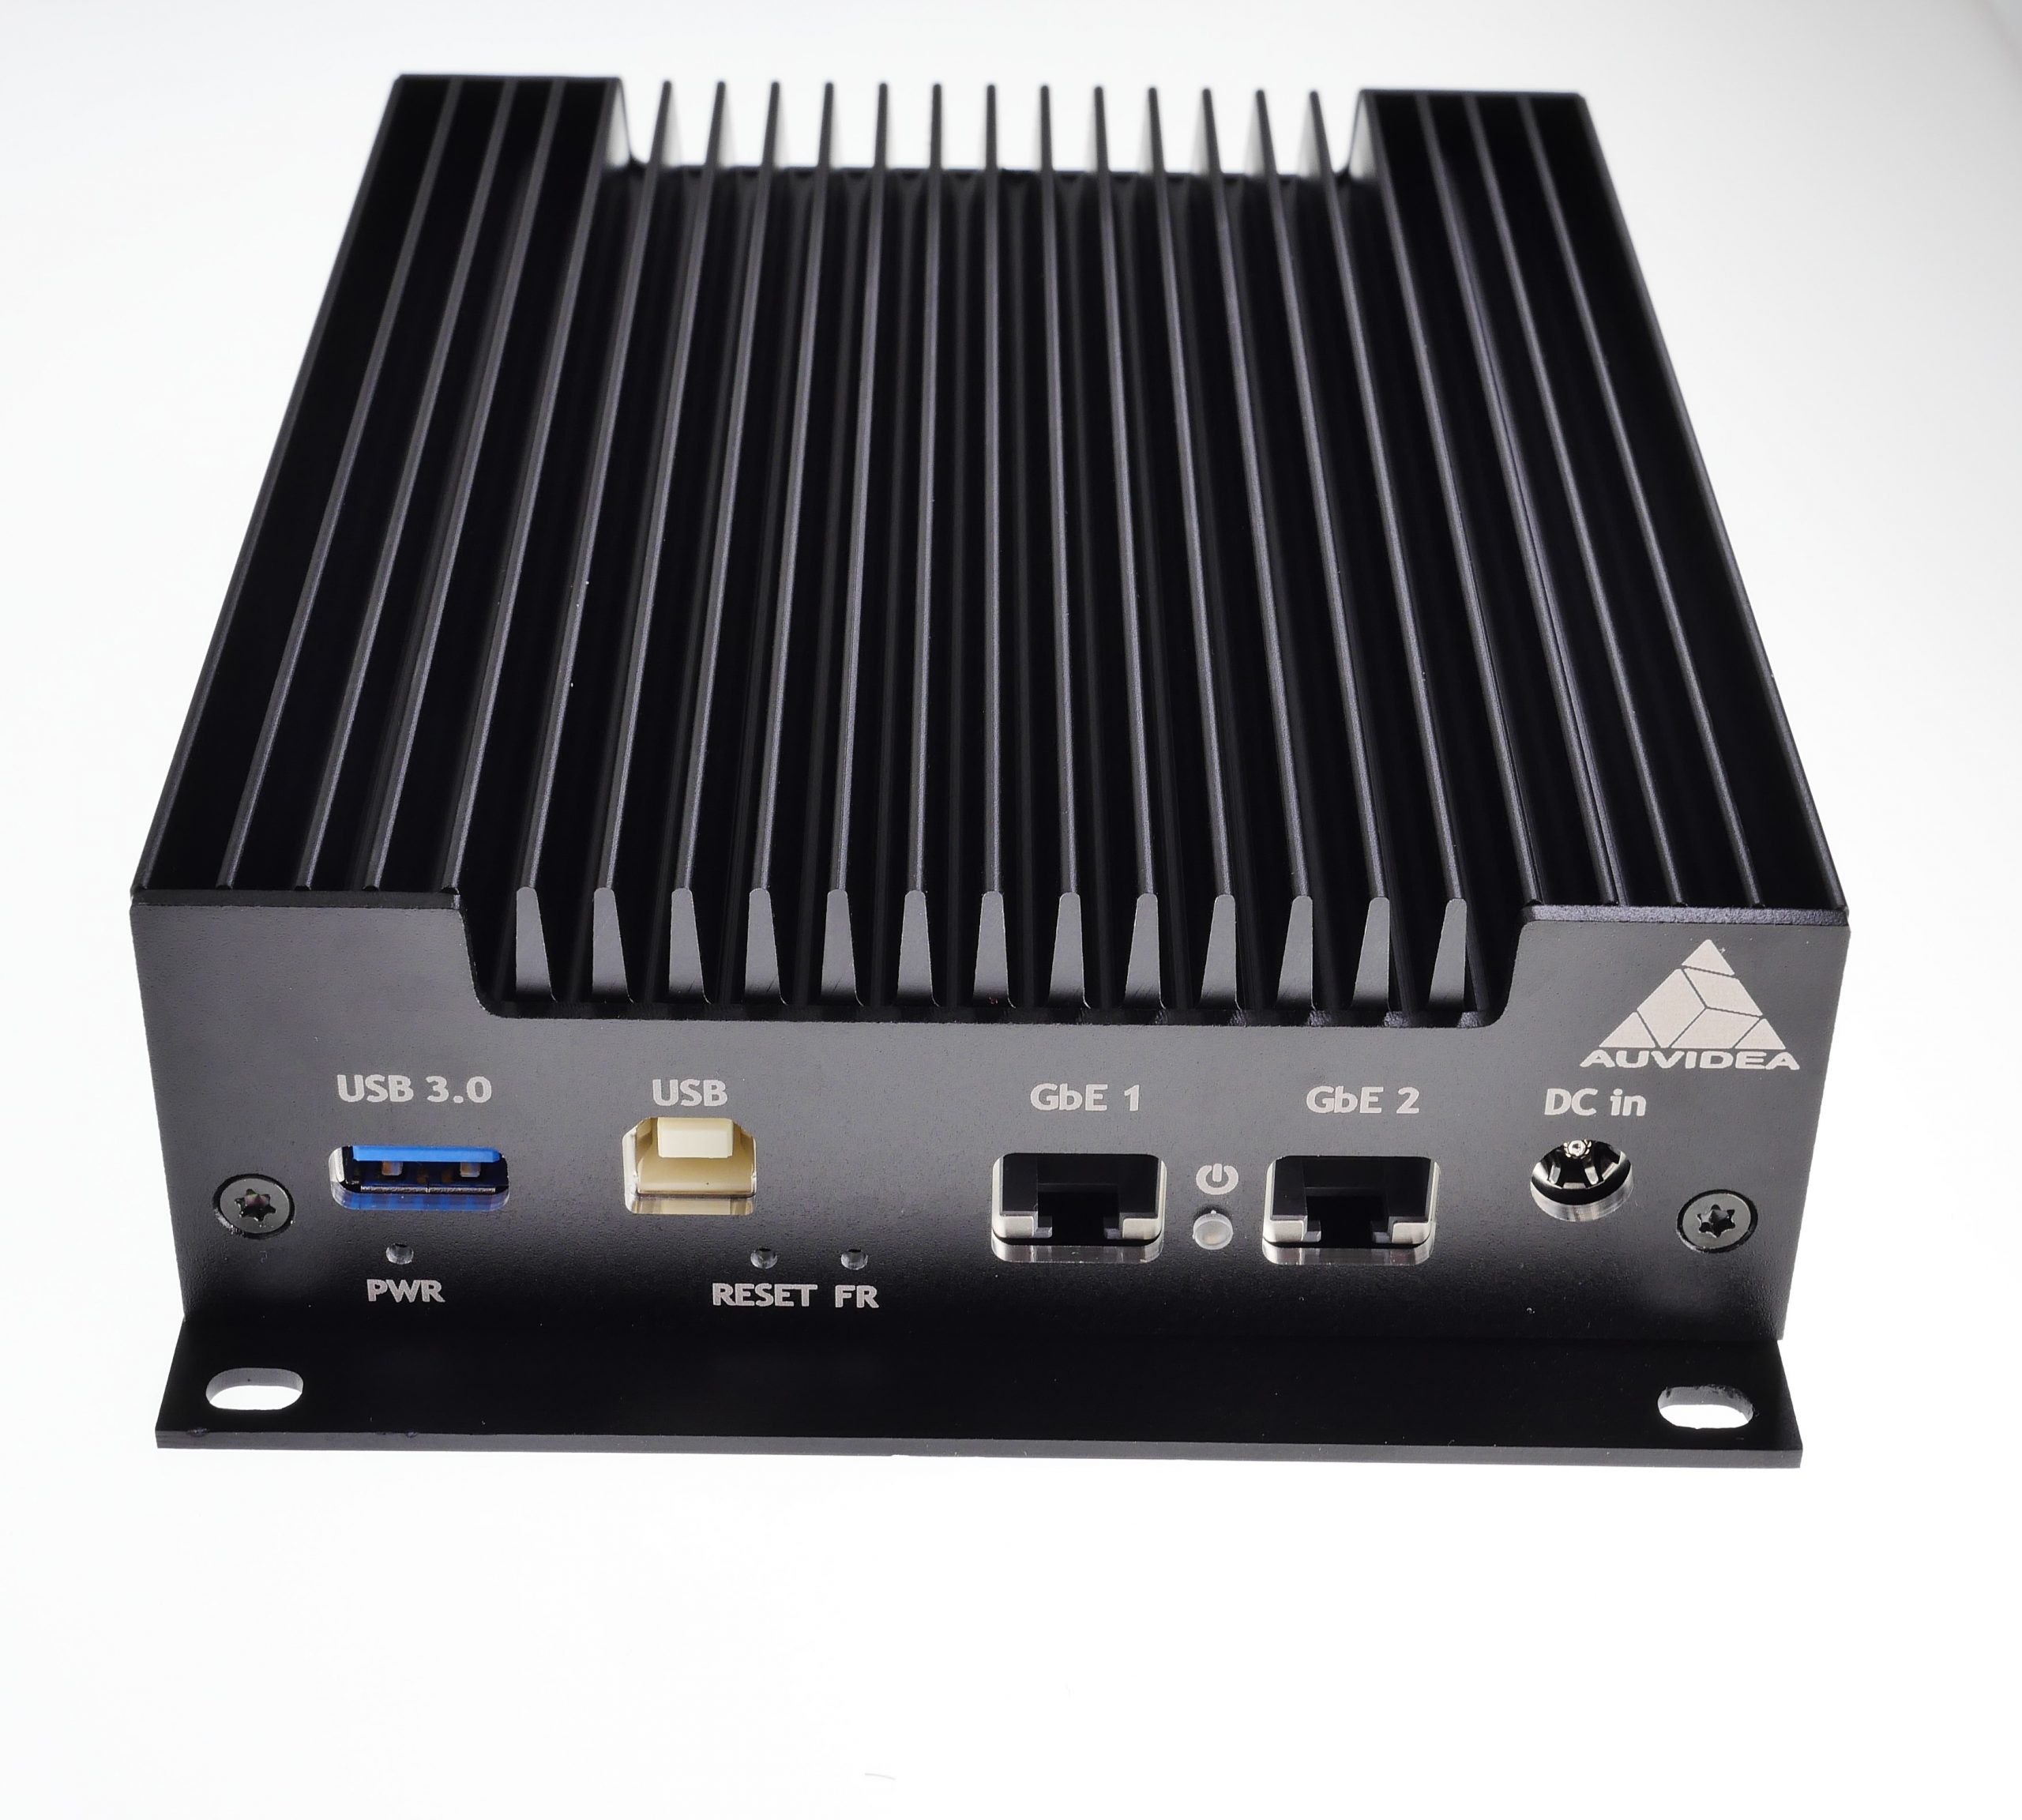 ES-JNX22 embedded system for NVIDIA Jetson Xavier NX